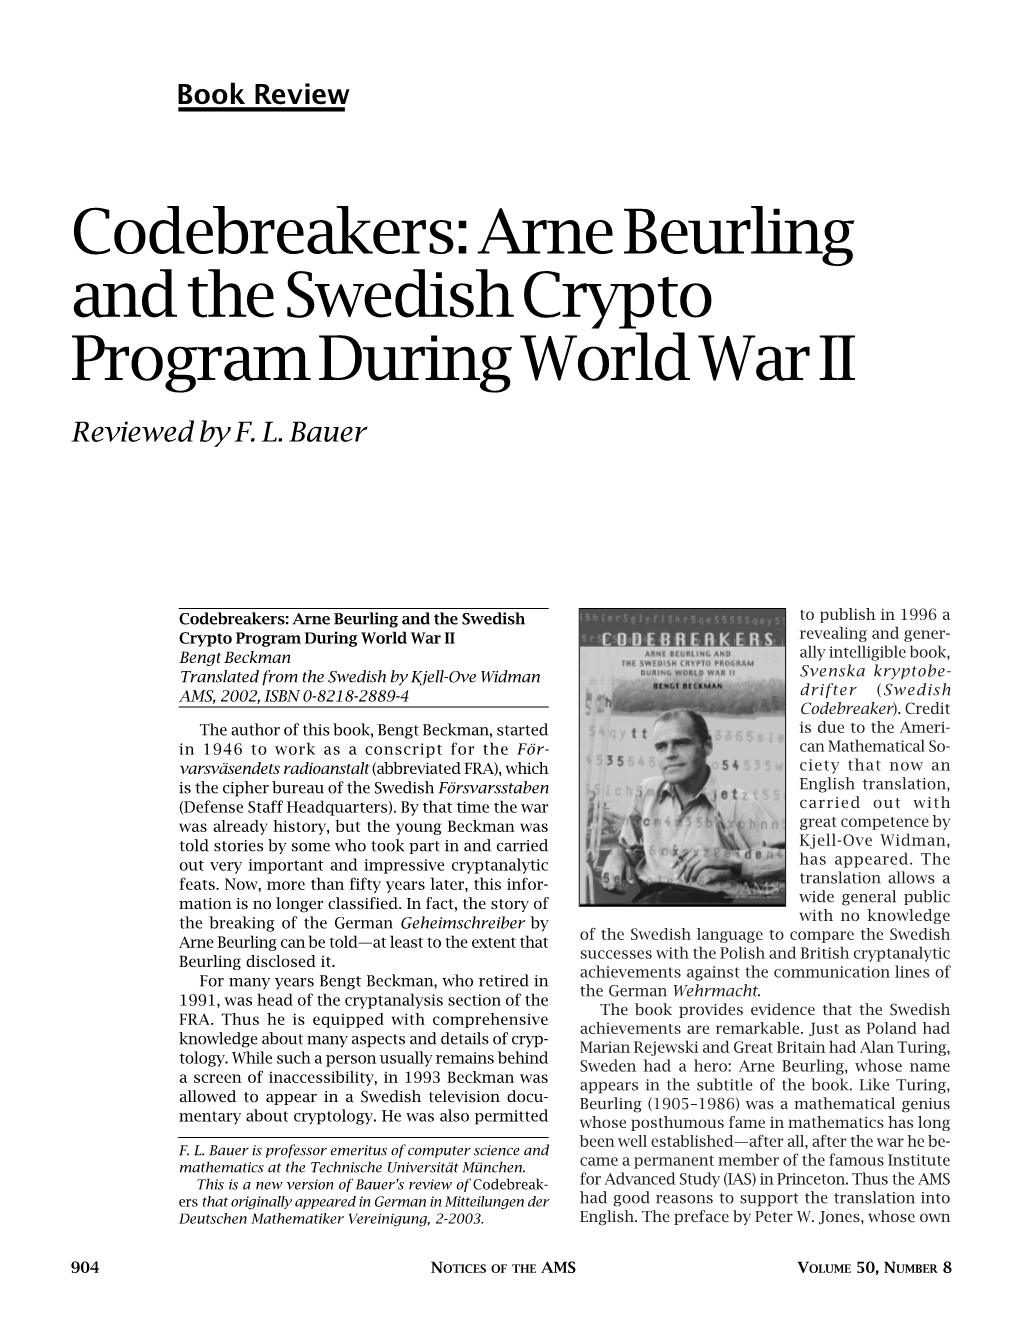 Codebreakers: Arne Beurling and the Swedish Crypto Program During World War II